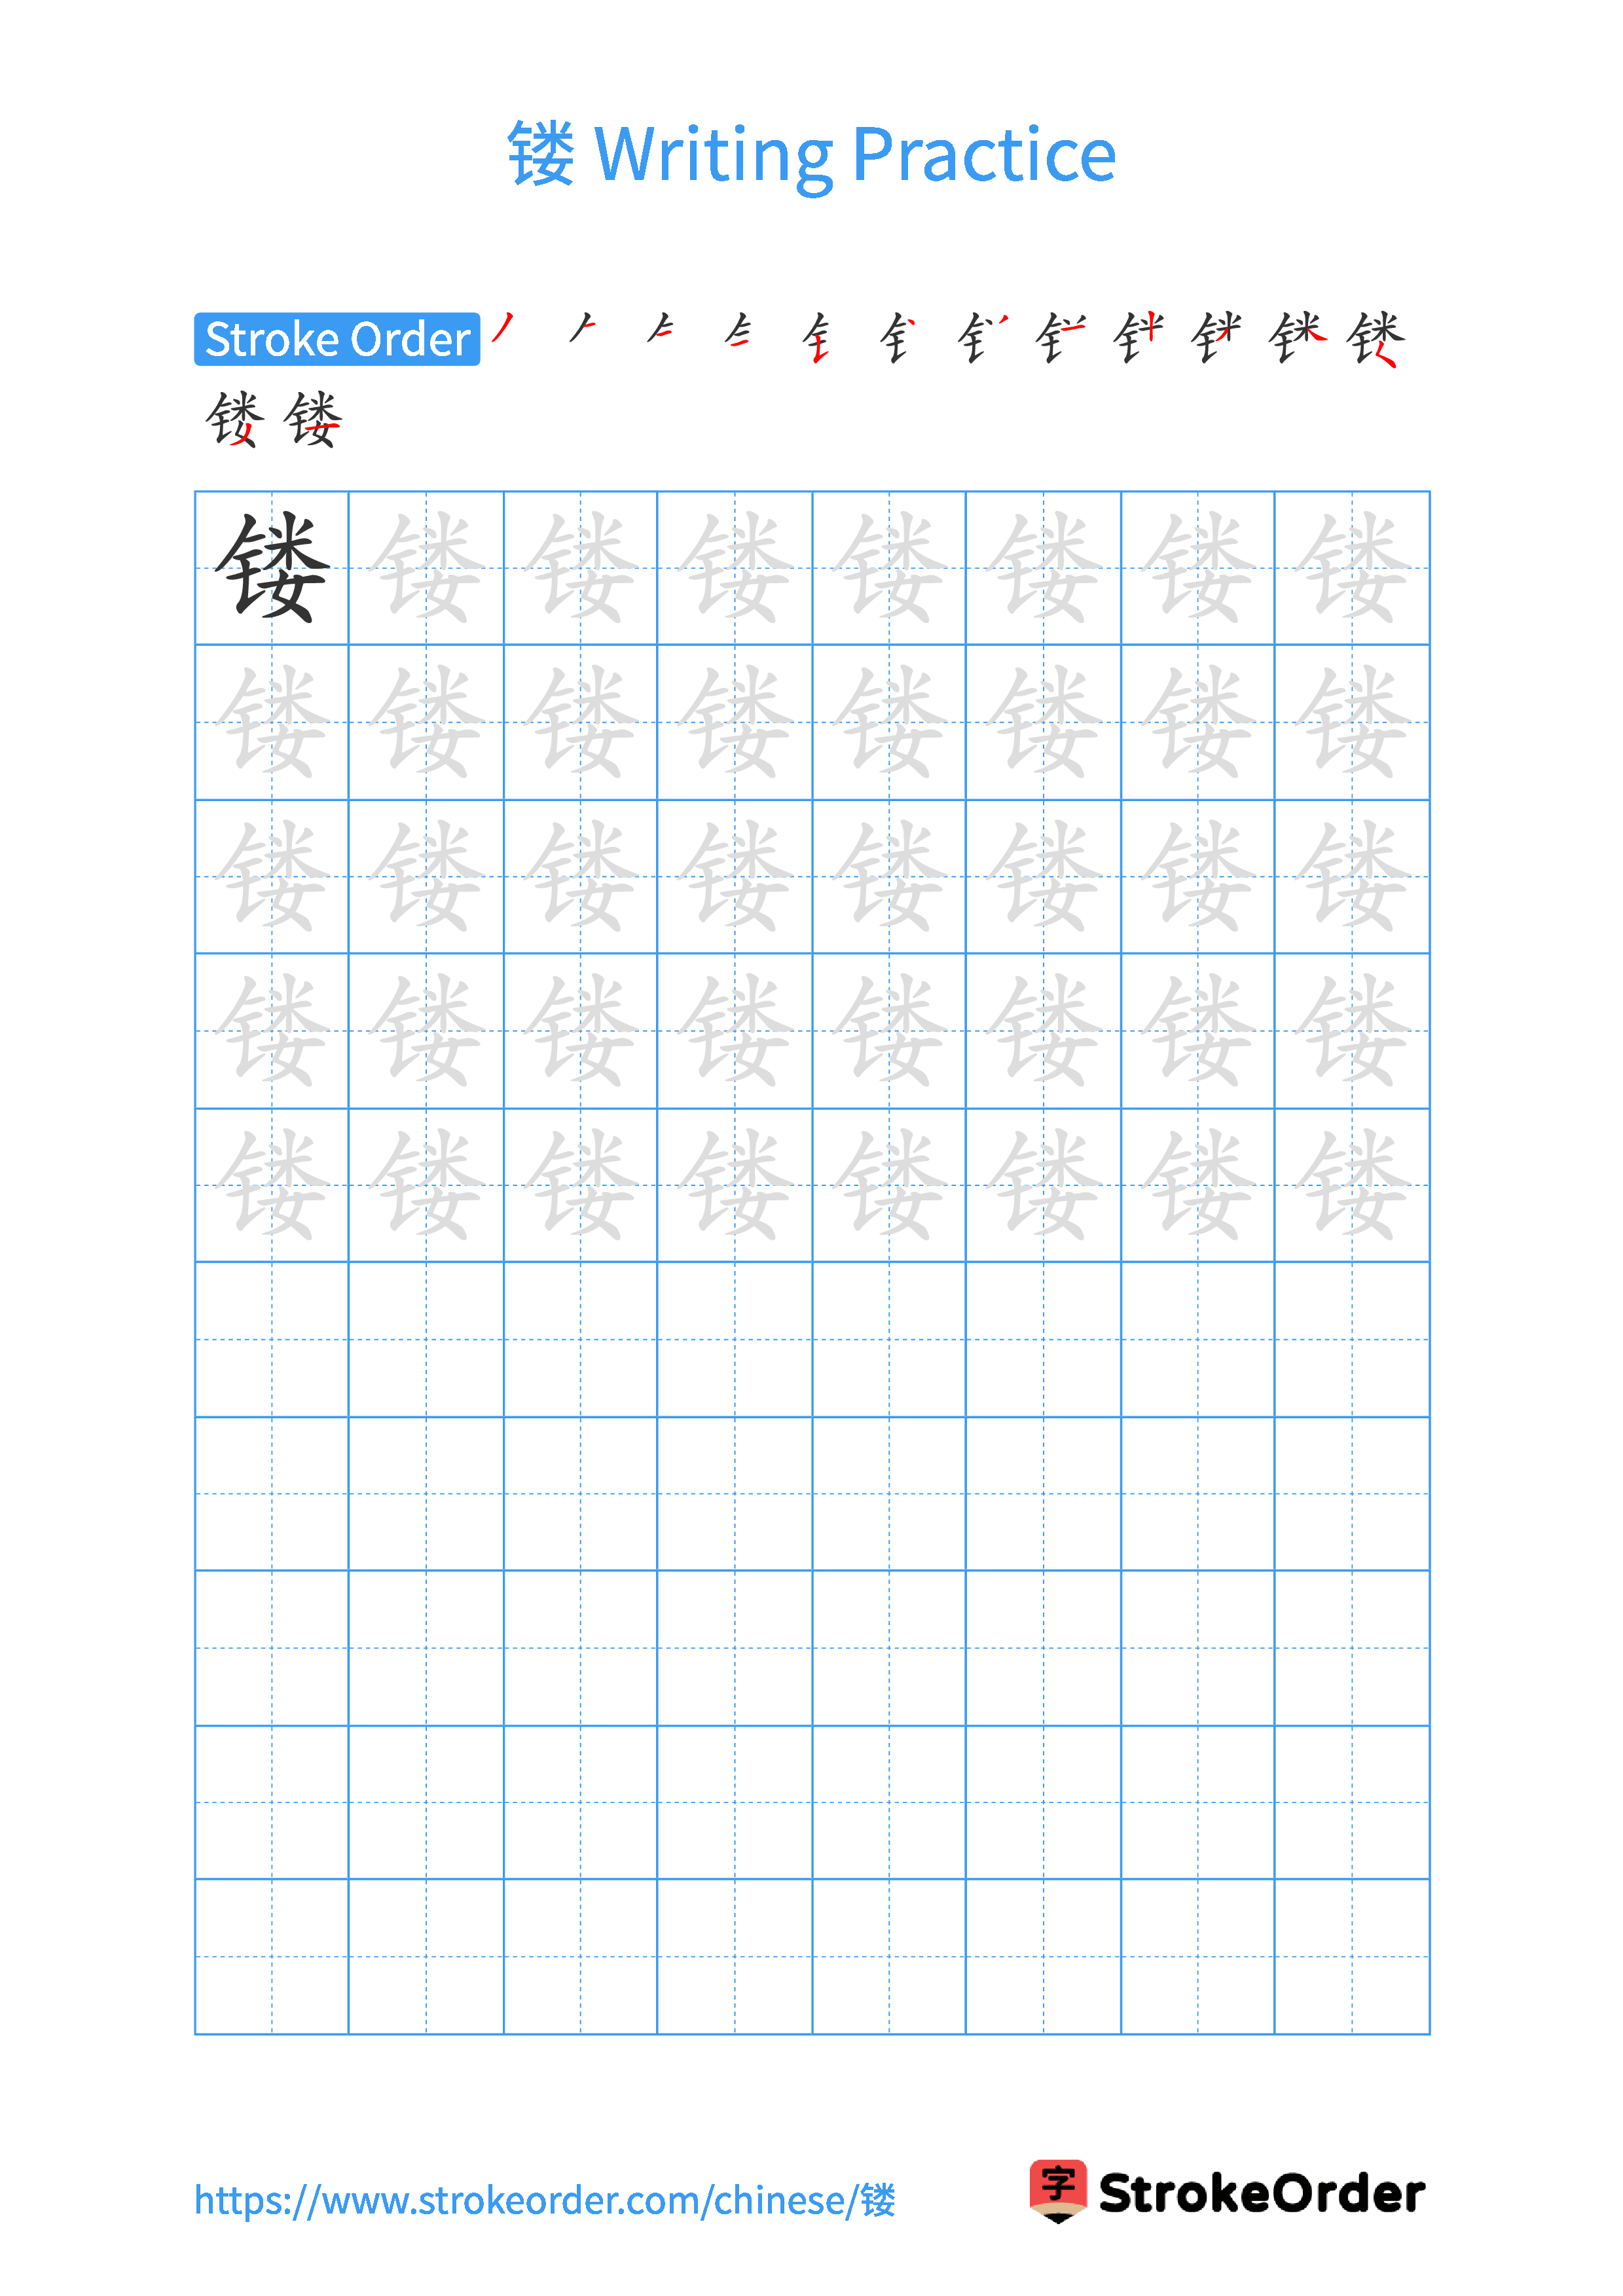 Printable Handwriting Practice Worksheet of the Chinese character 镂 in Portrait Orientation (Tian Zi Ge)